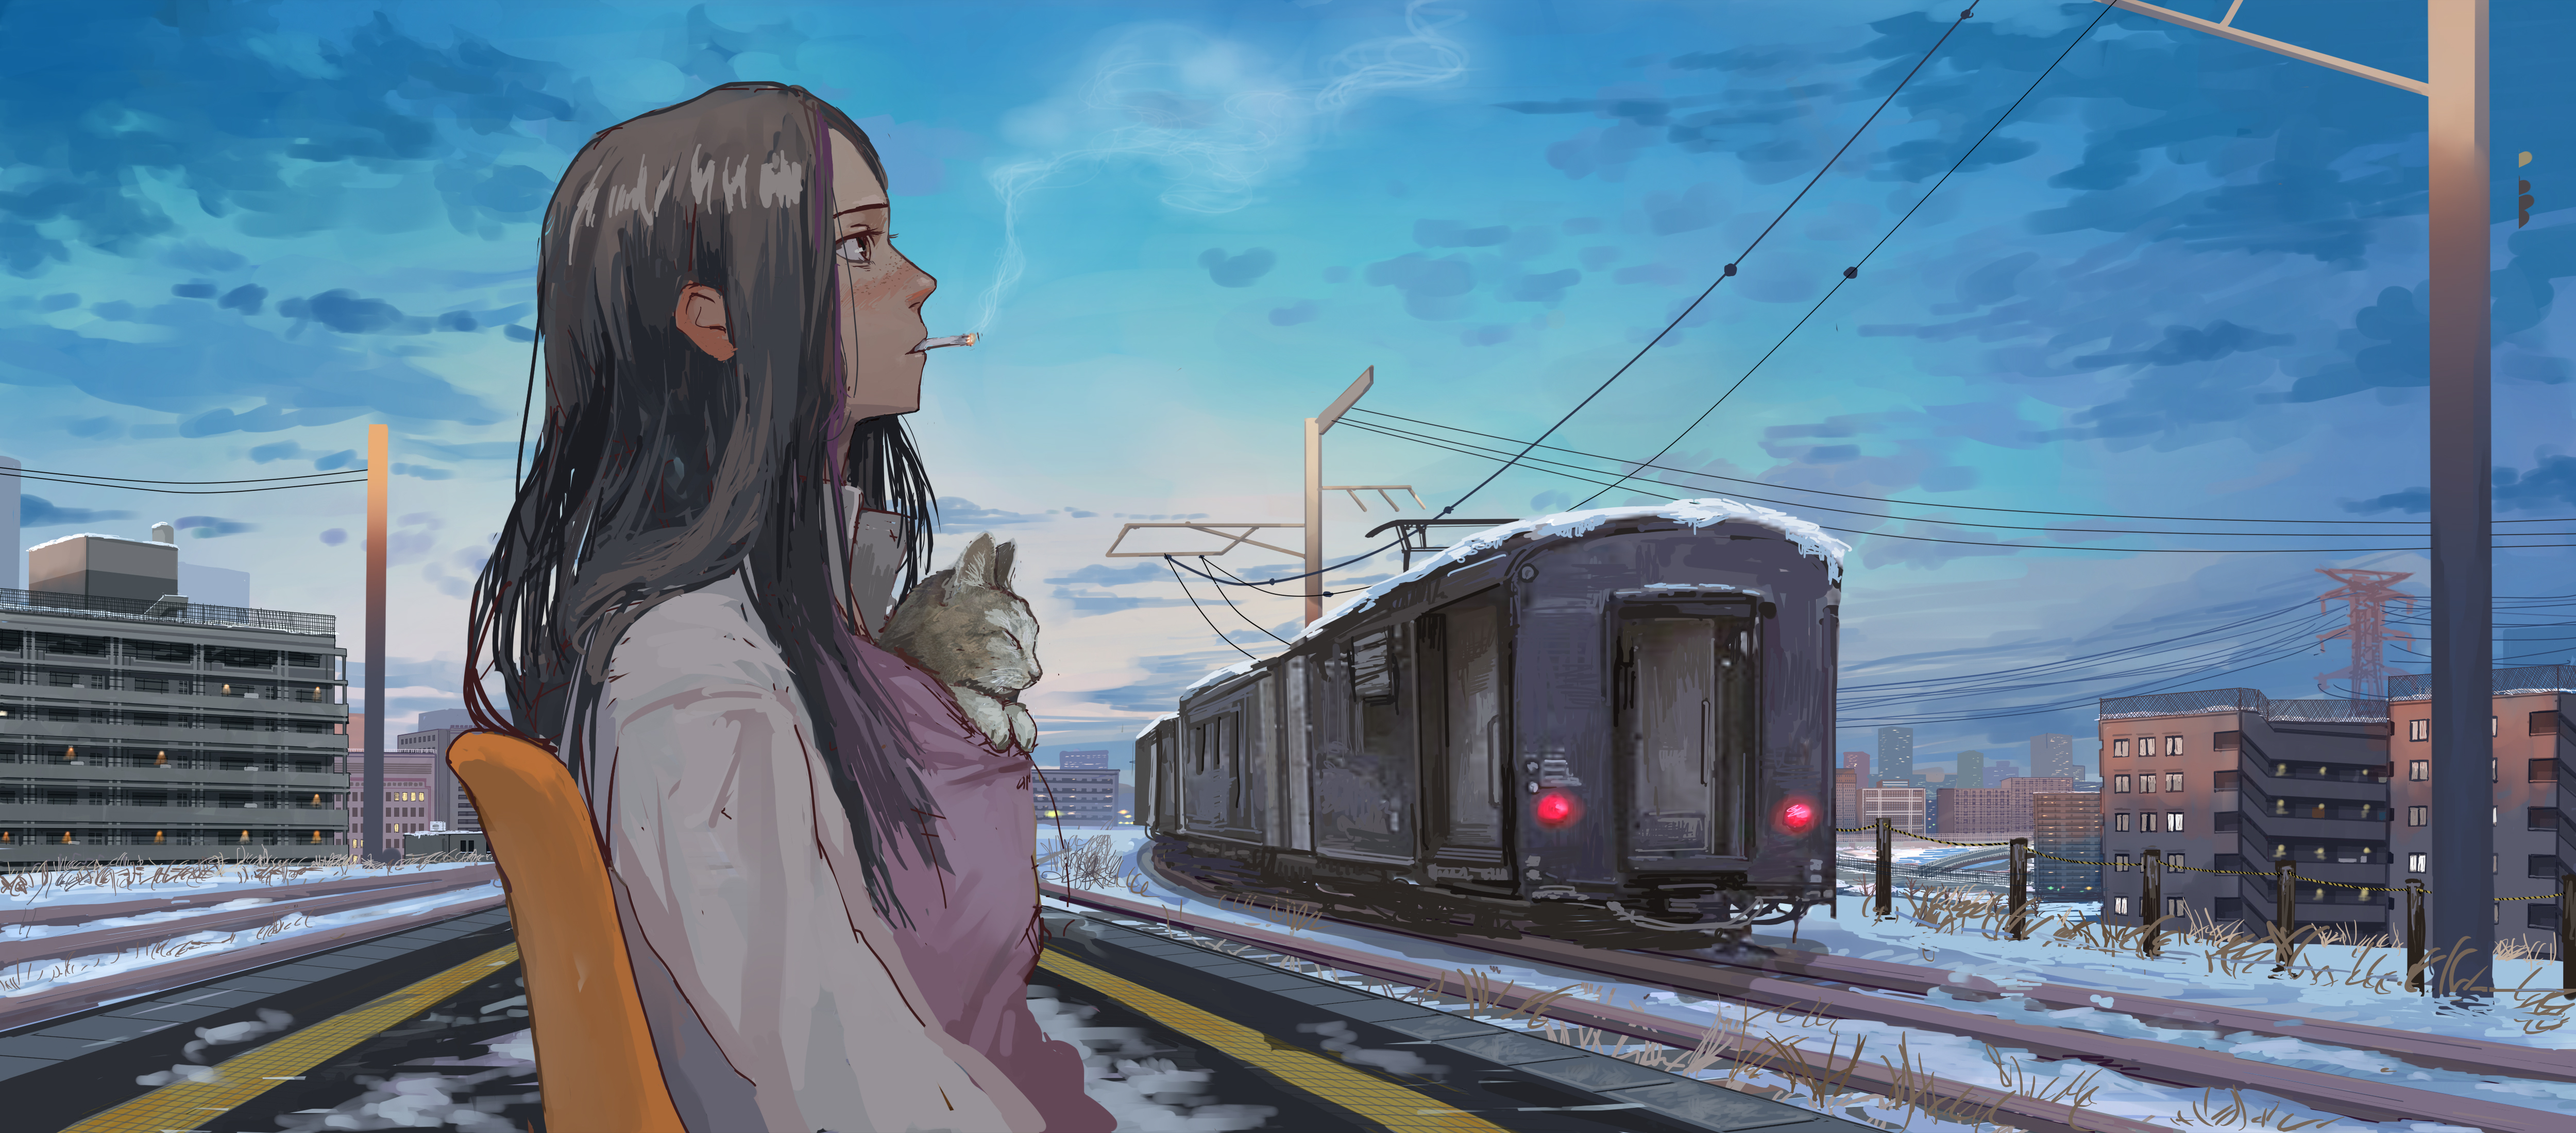 Anime Train Animated Wallpaper  MyLiveWallpaperscom